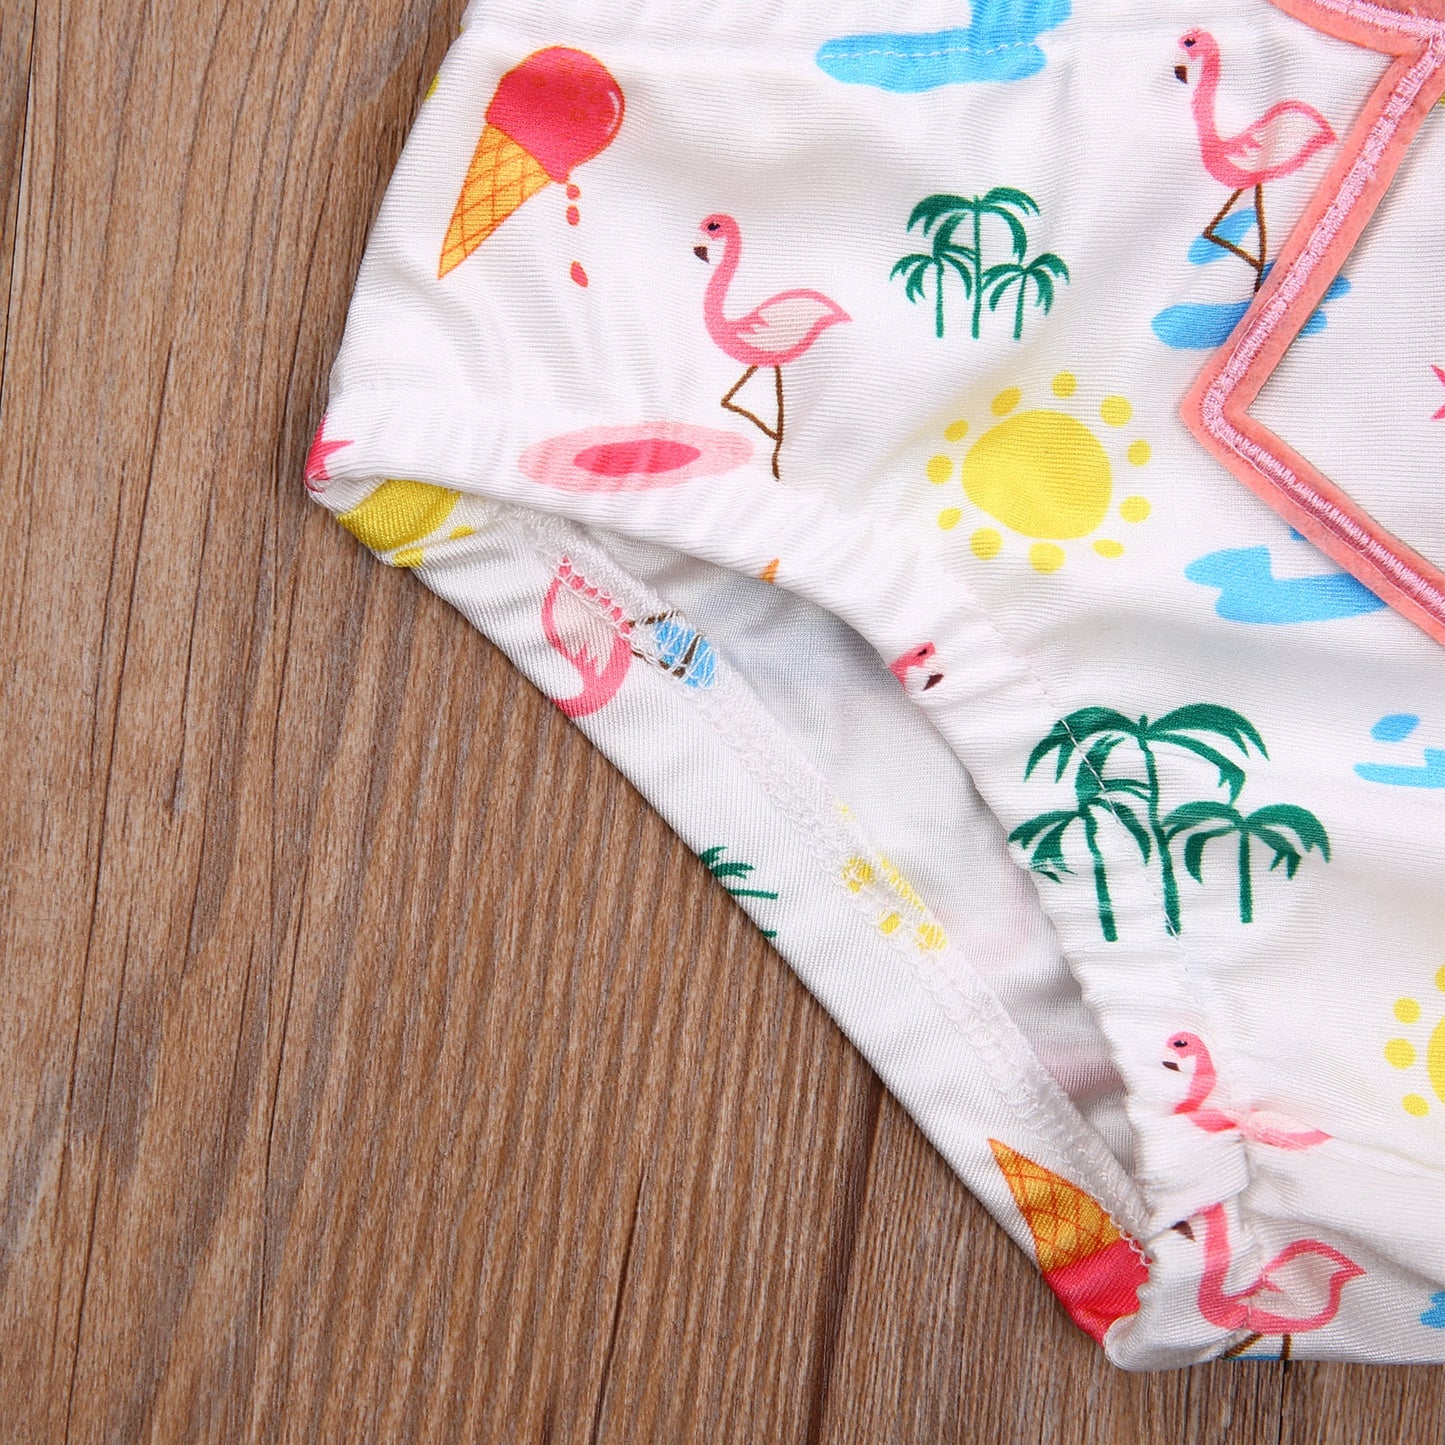 Infant Baby Girls One Piece Swimsuit Fashion Flamingo Print Summer Swimwear